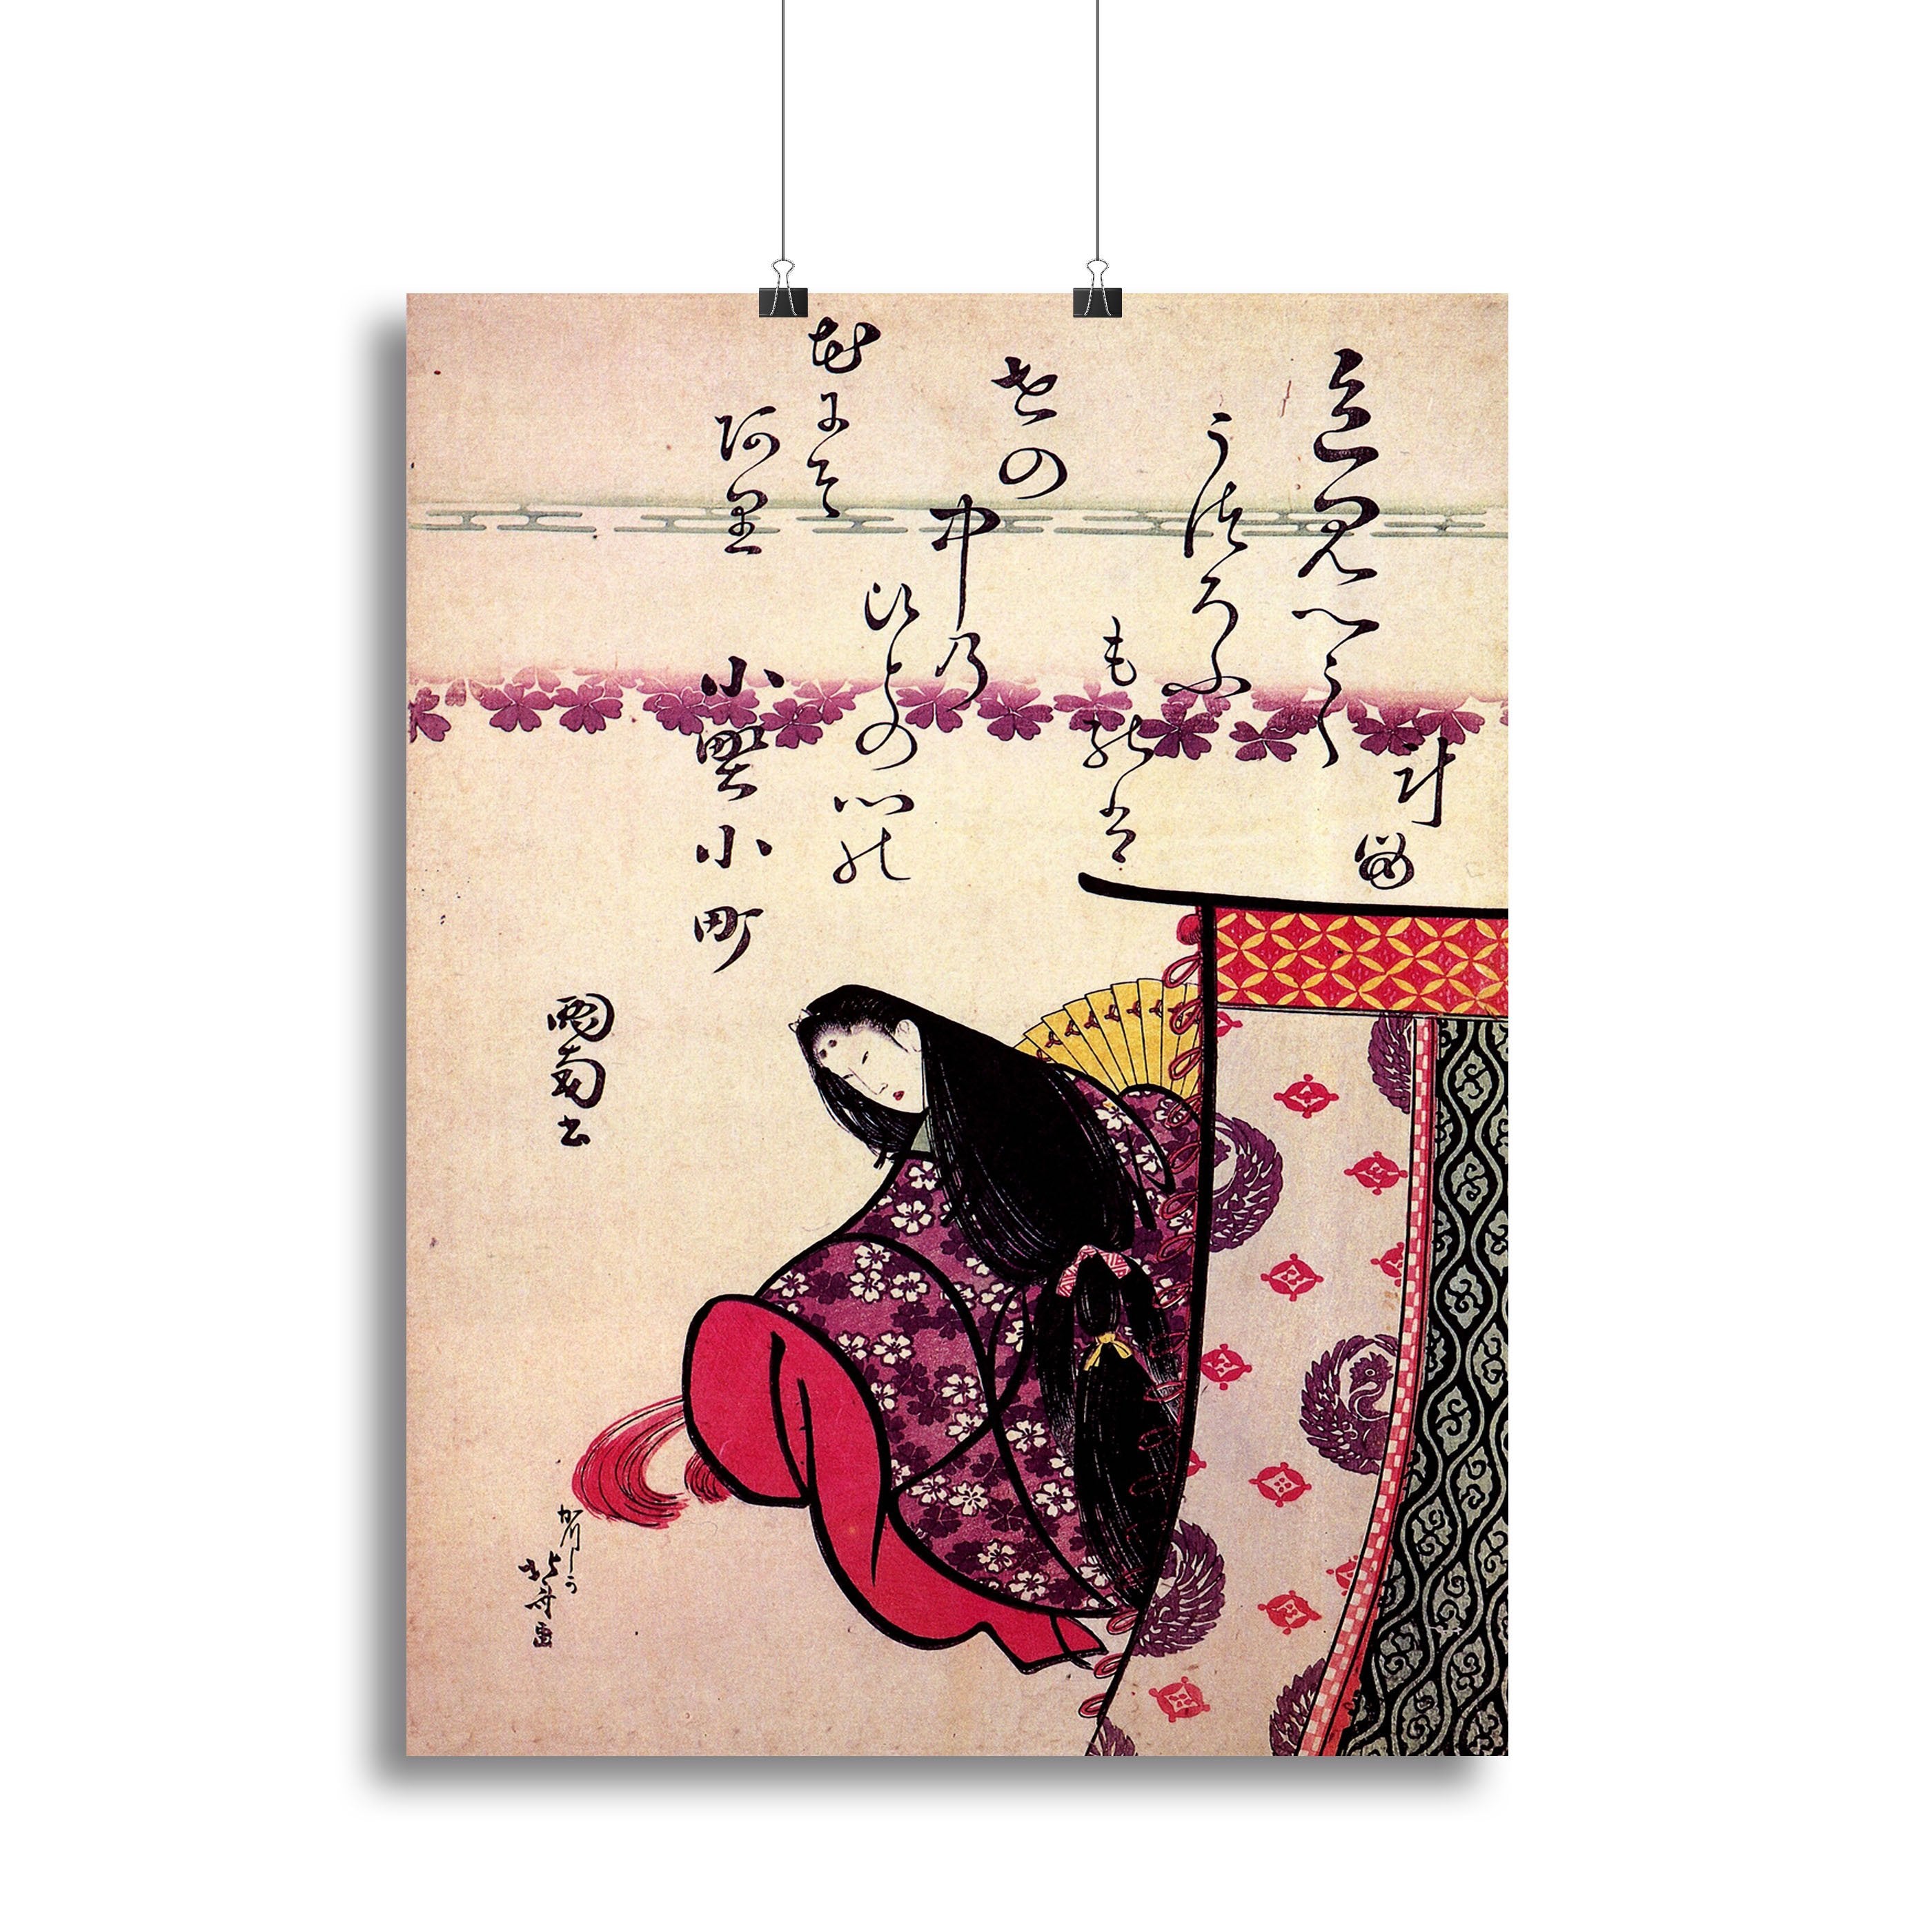 Poetess Ononokomatschi by Hokusai Canvas Print or Poster